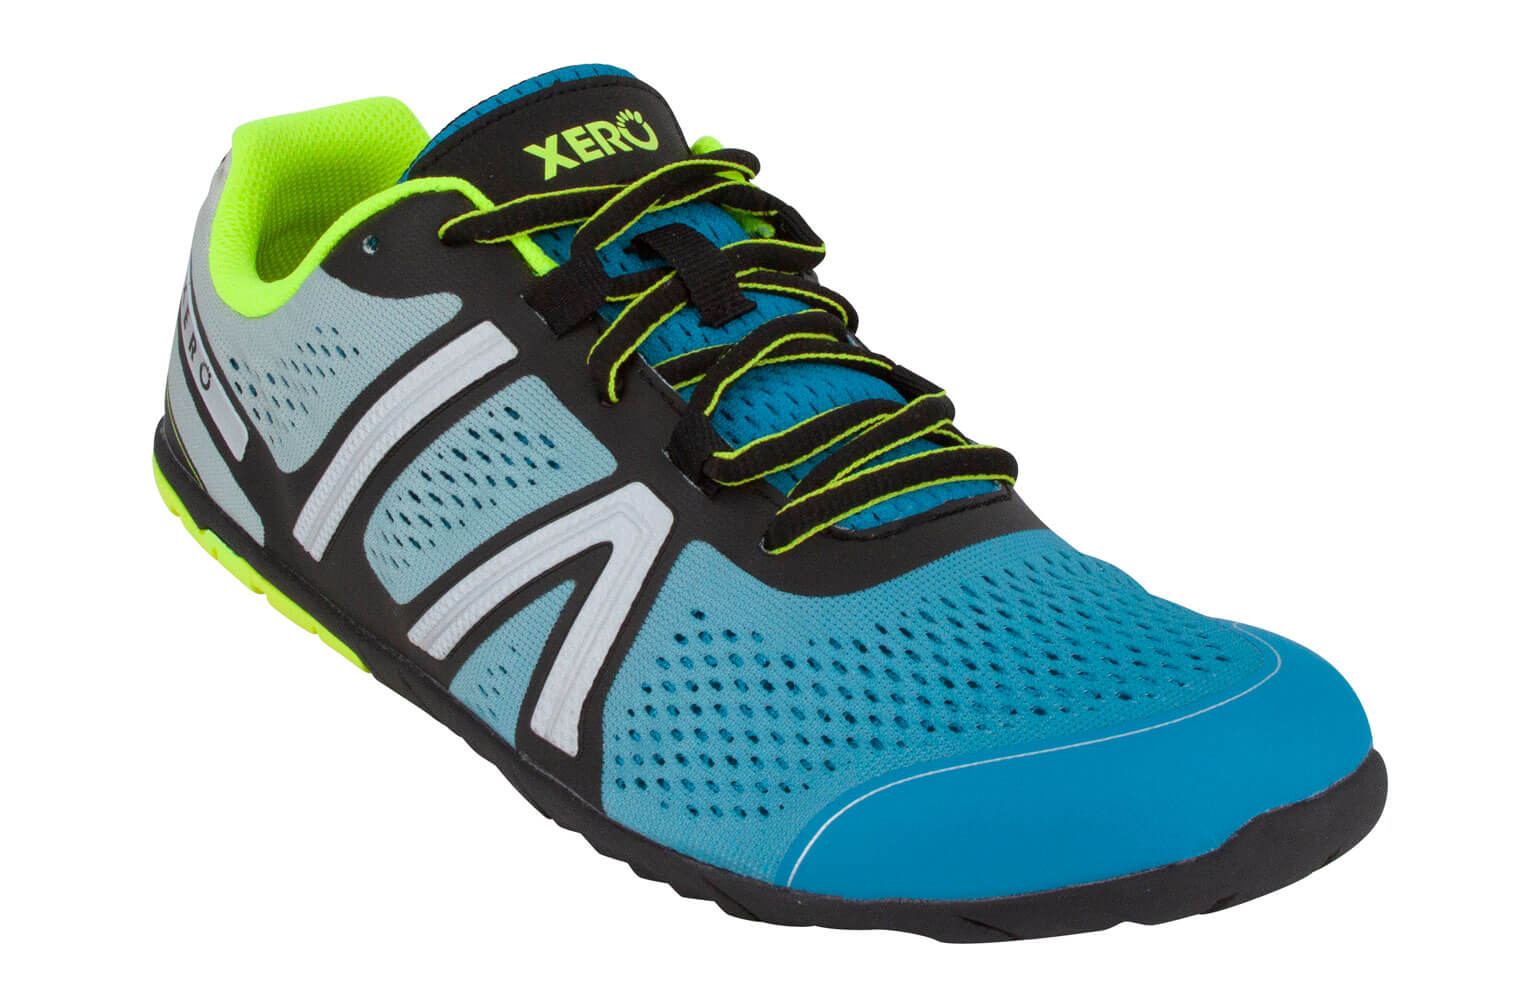 HFS - Barefoot-friendly, Minimalist Men's Road Running Shoe - Xero Shoes